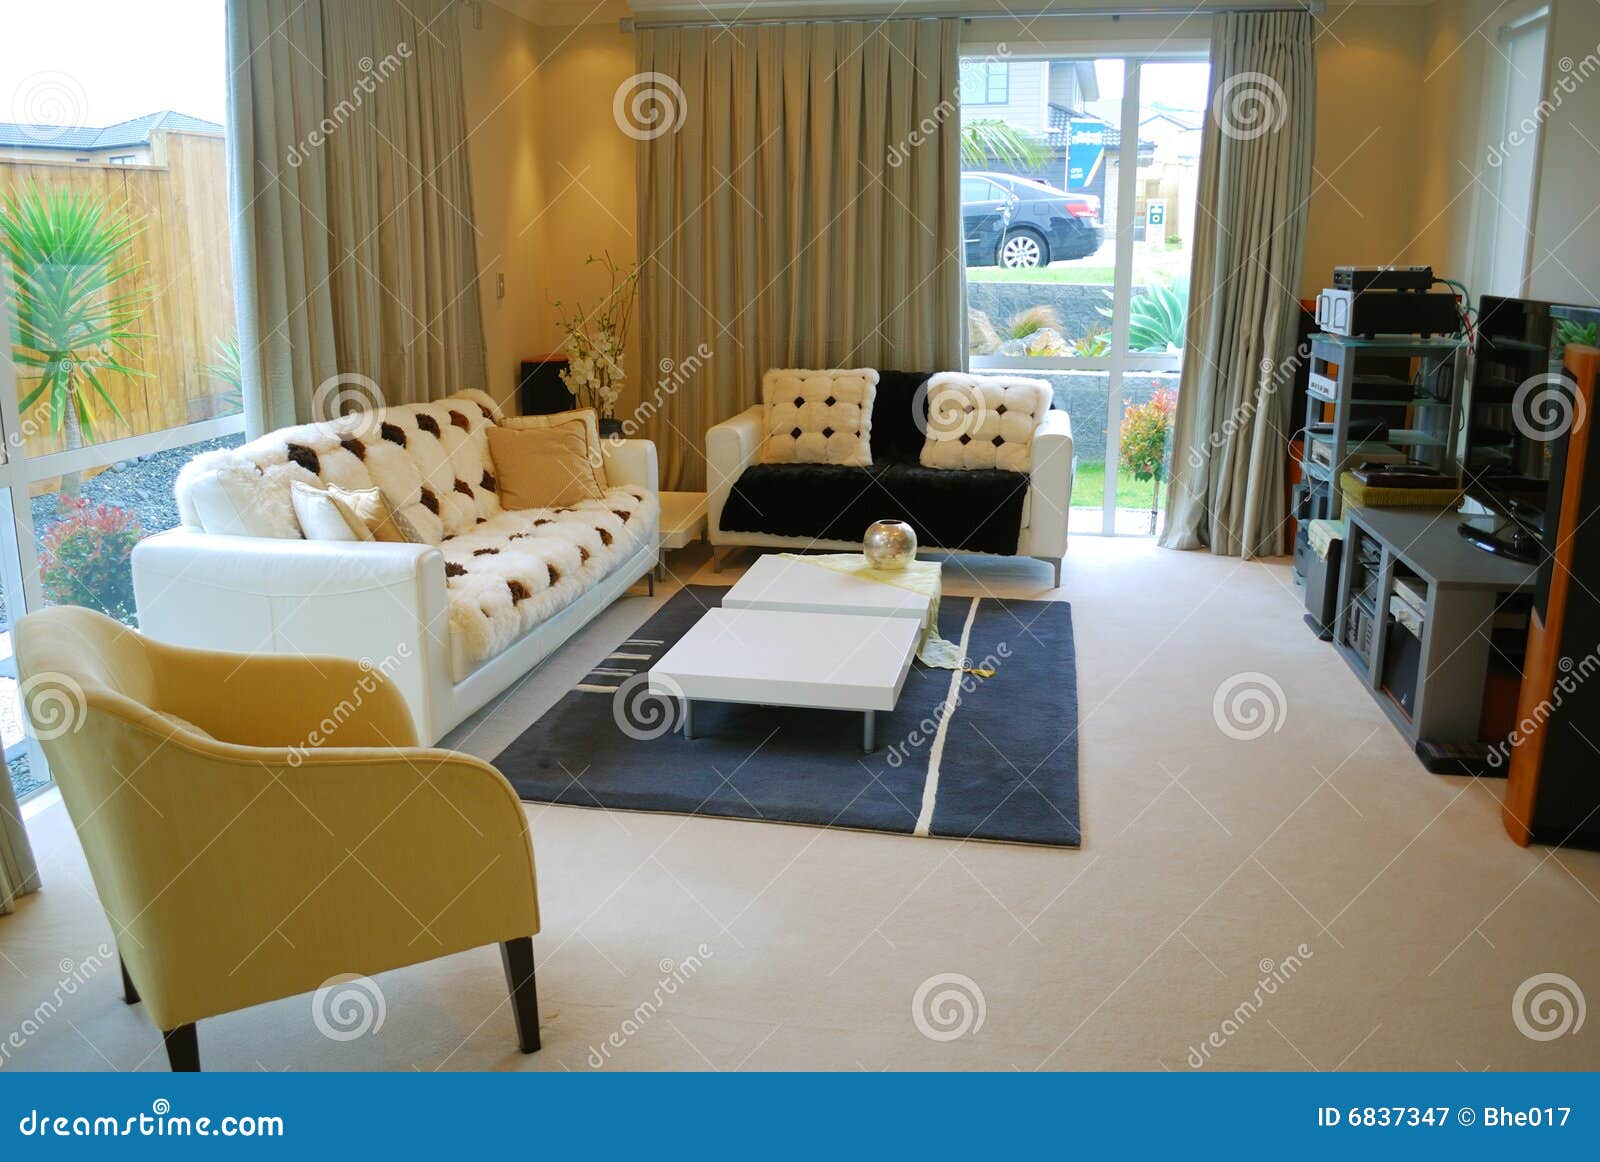 Stylish interior design stock image. Image of pillow, armchair - 6837347